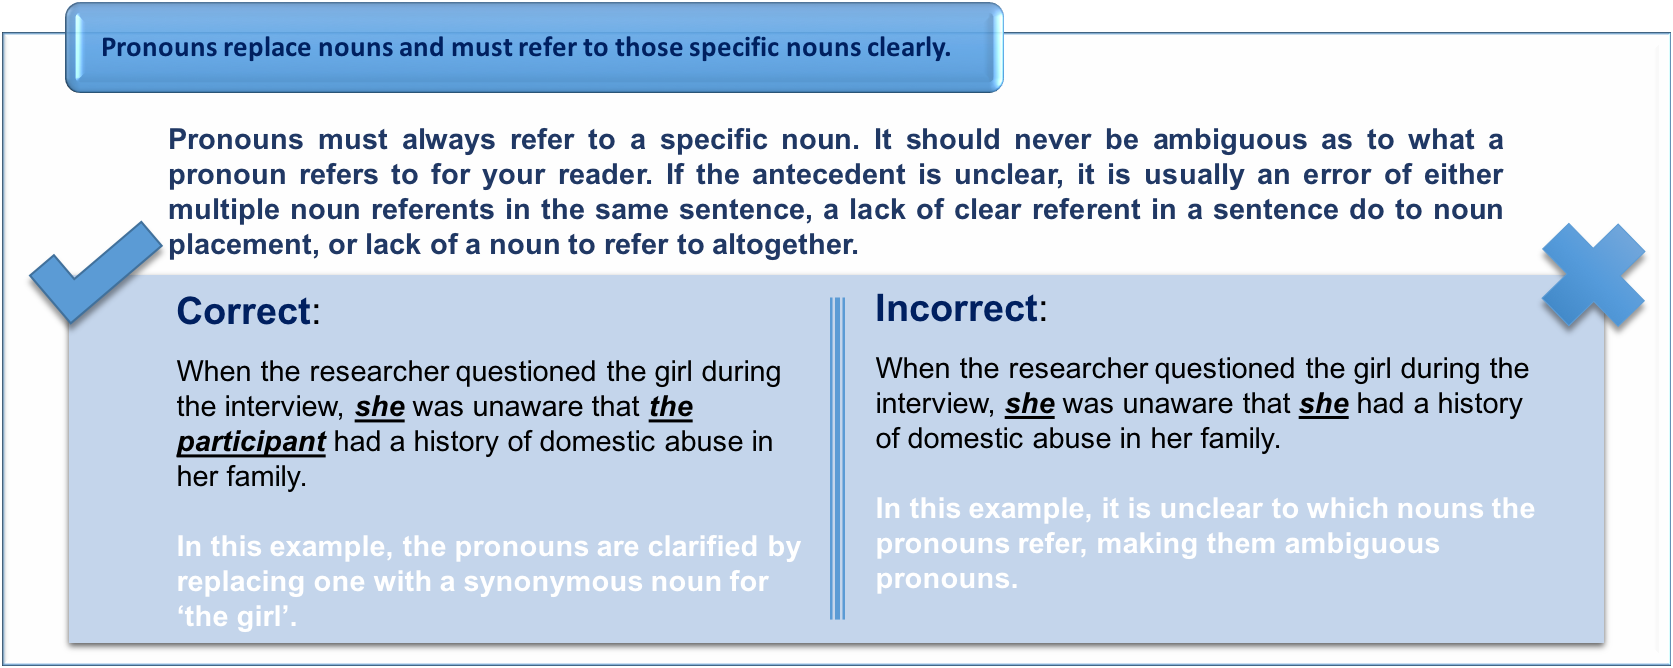 general pronoun rules.png